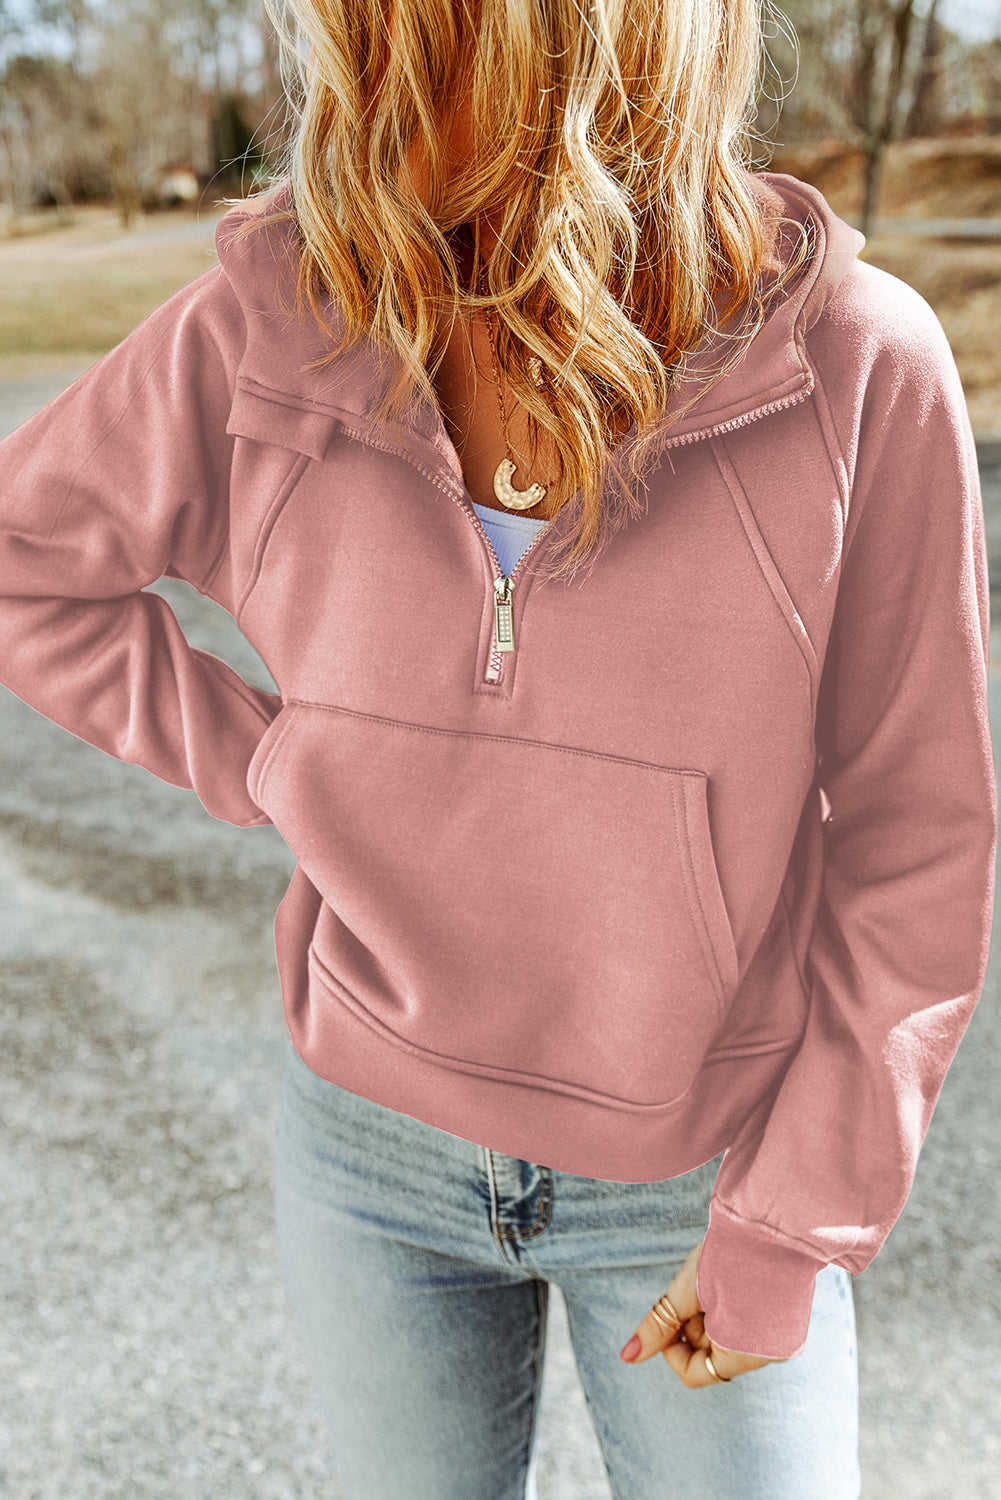 Women's Half-Zip Thumbhole Sleeve Hoodie with Kangaroo Pocket Blush Pink L